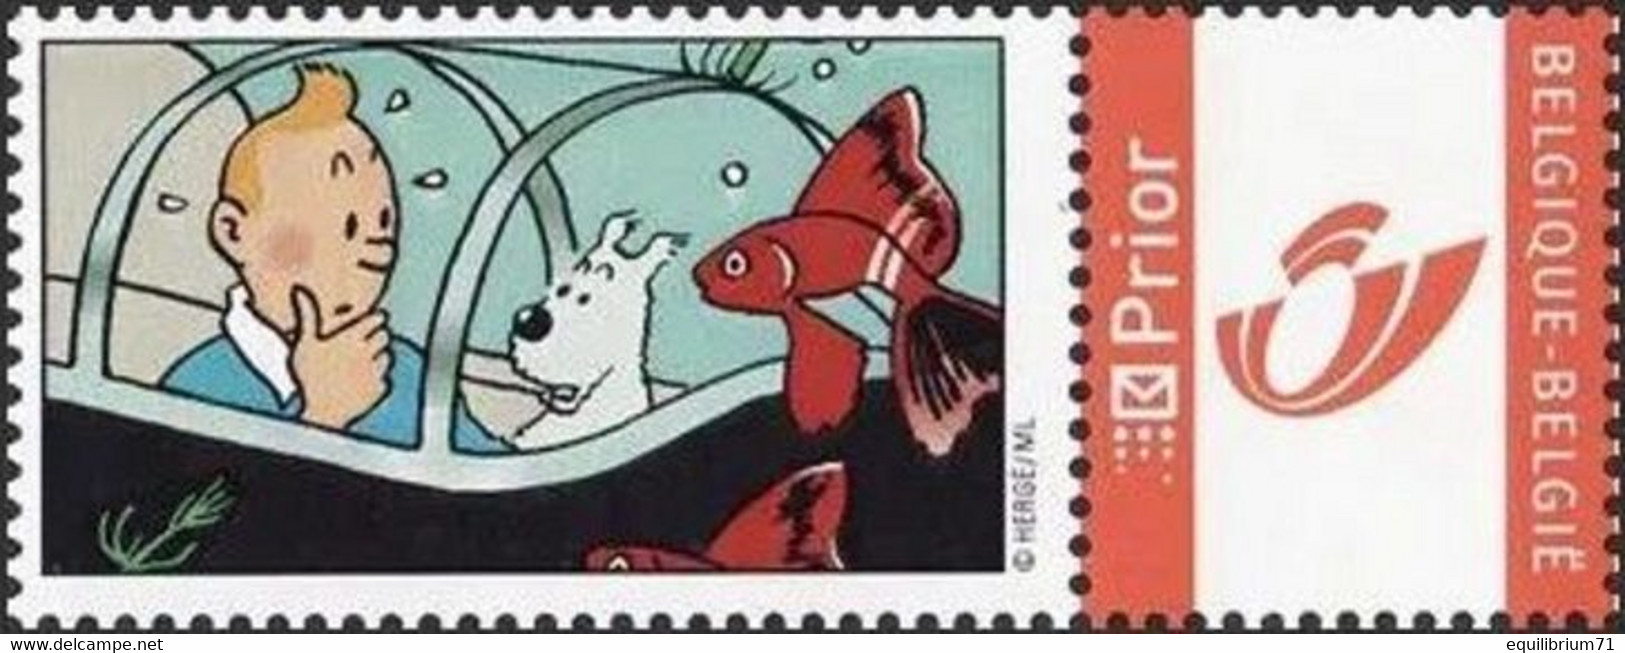 DUOSTAMP** / MYSTAMP**-  Tintin / Kuifje / Tim - Rackham Le Rouge - Scharlaken Rackham / (Hergé) - Mint